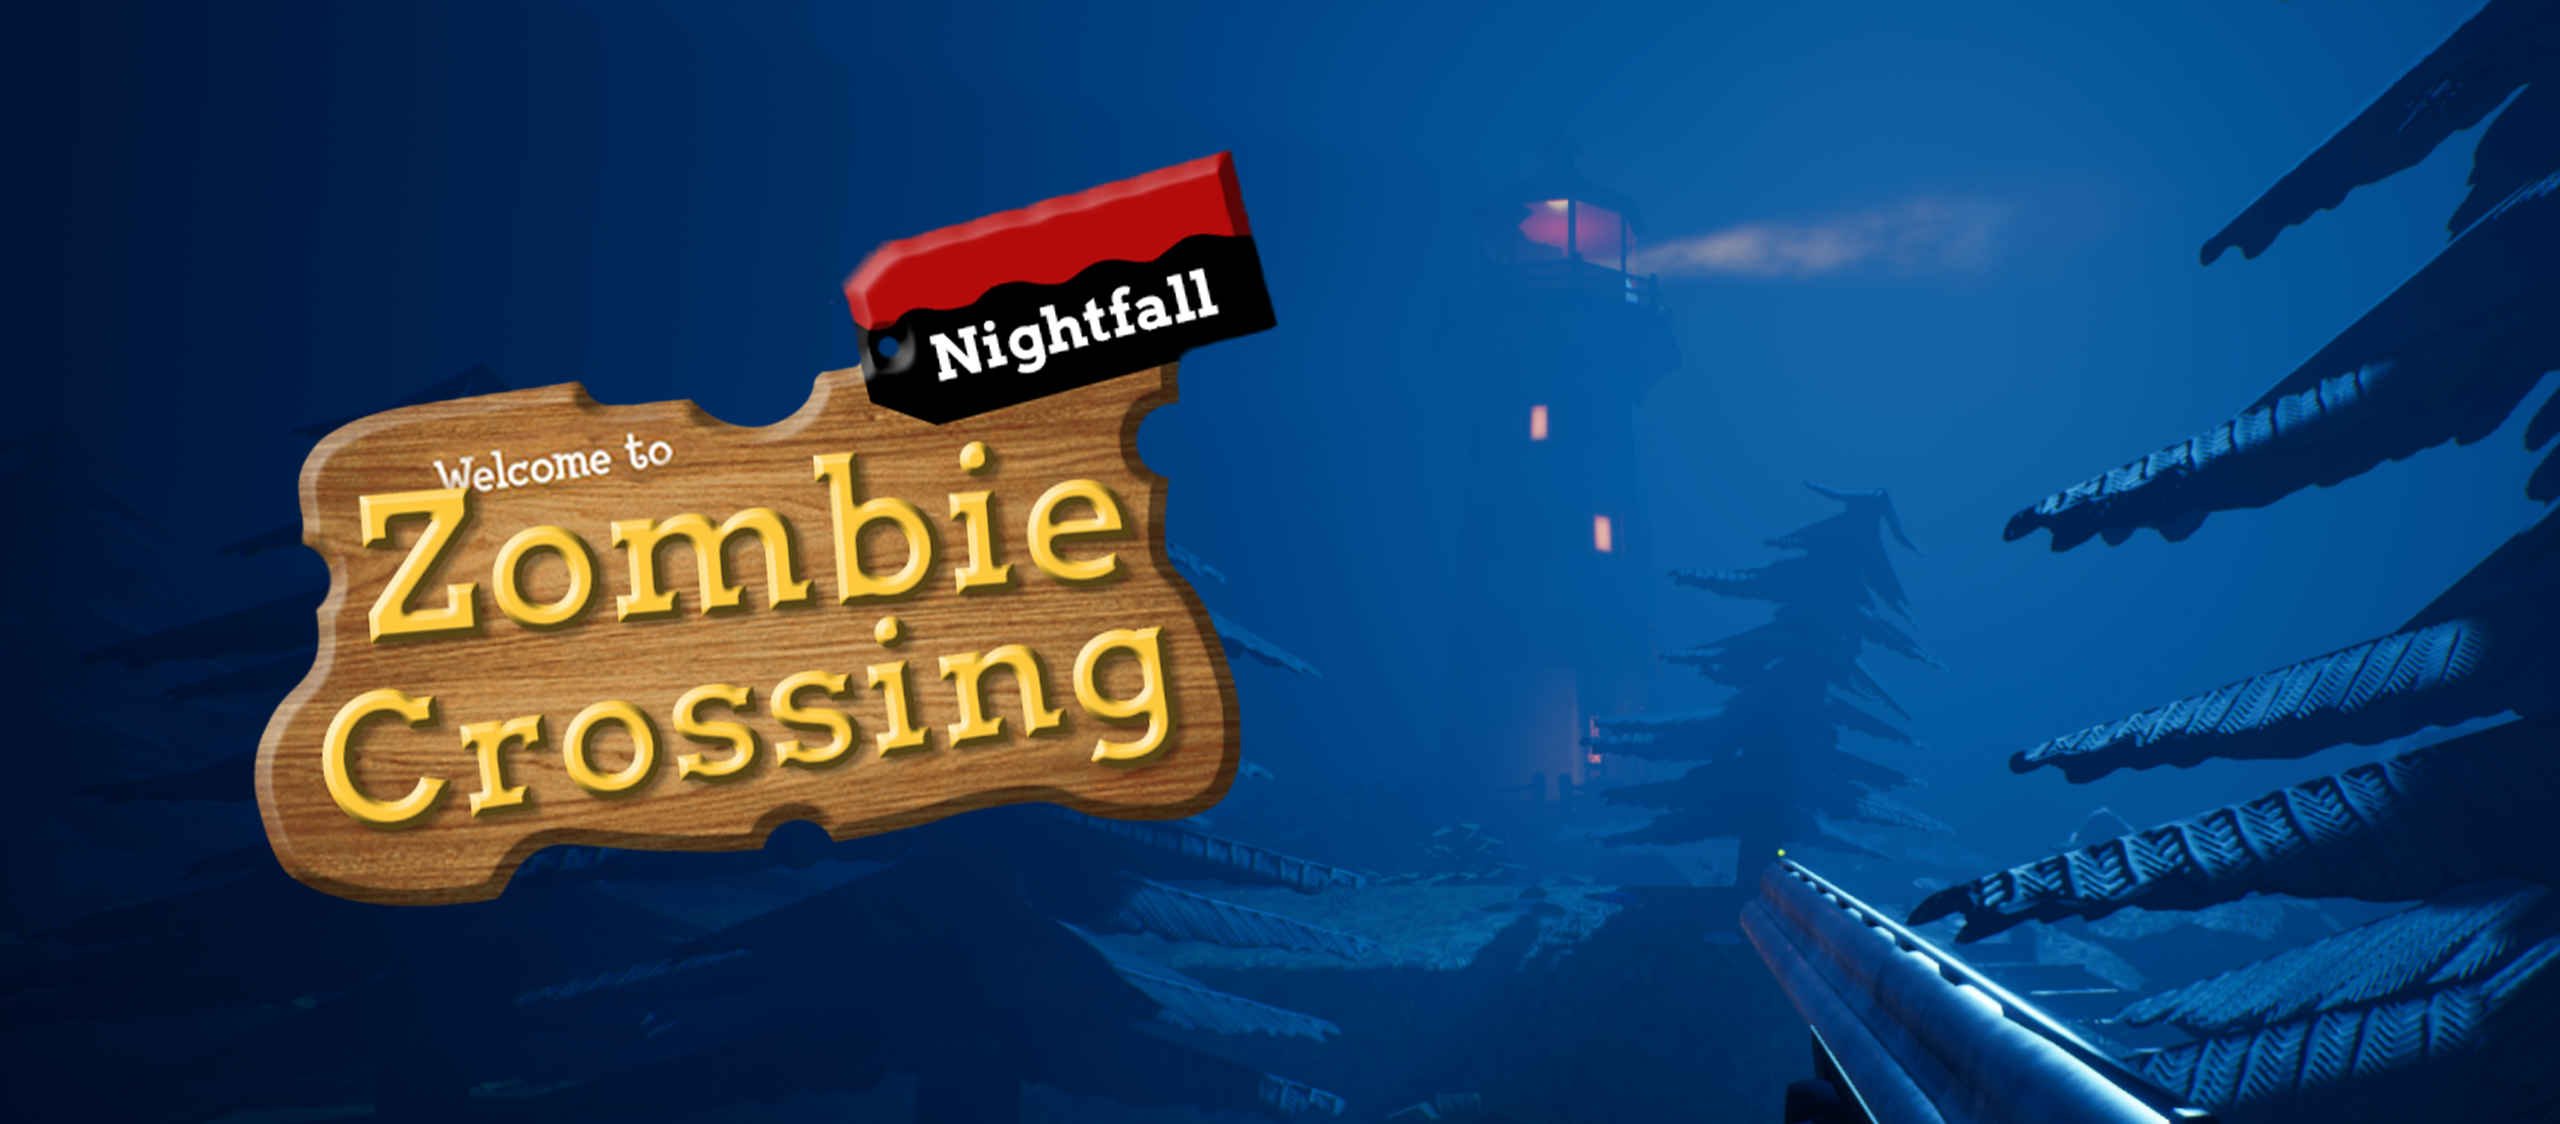 Zombie Crossing: Nightfall